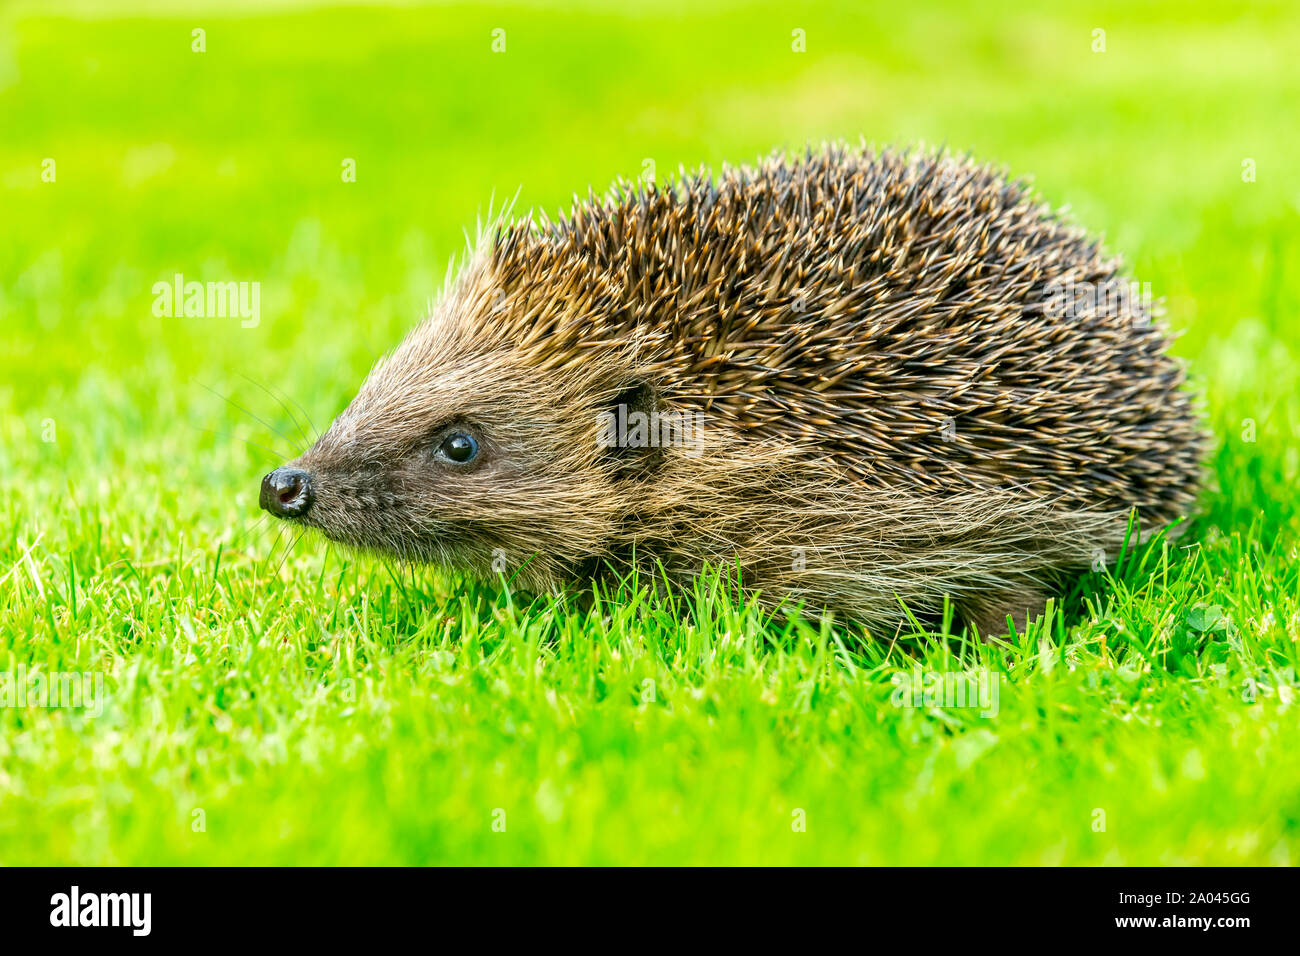 Hedgehog (Scientific name: Erinaceus europaeus) simple image of a native, wild, European hedgehog on green grass lawn.Facing left. Close up. Landscape Stock Photo